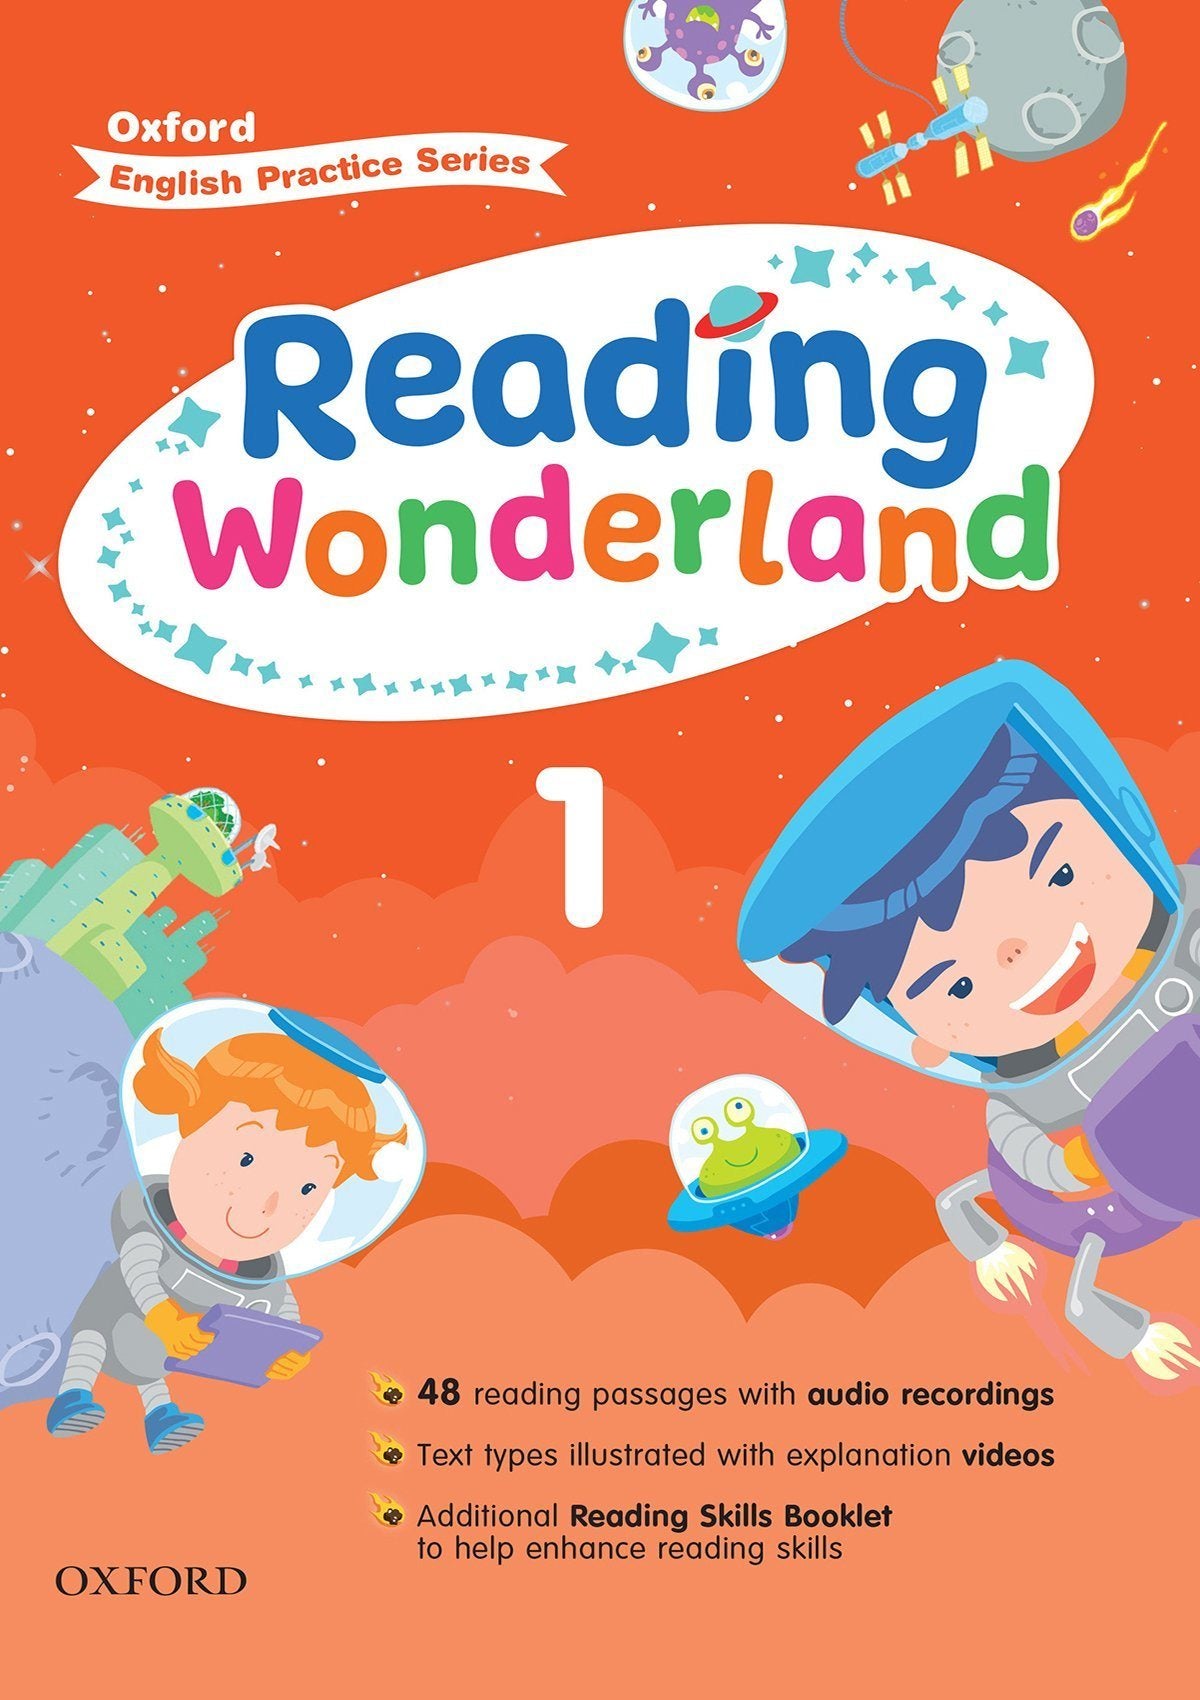 Oxford English Practice Series – Reading Wonderland